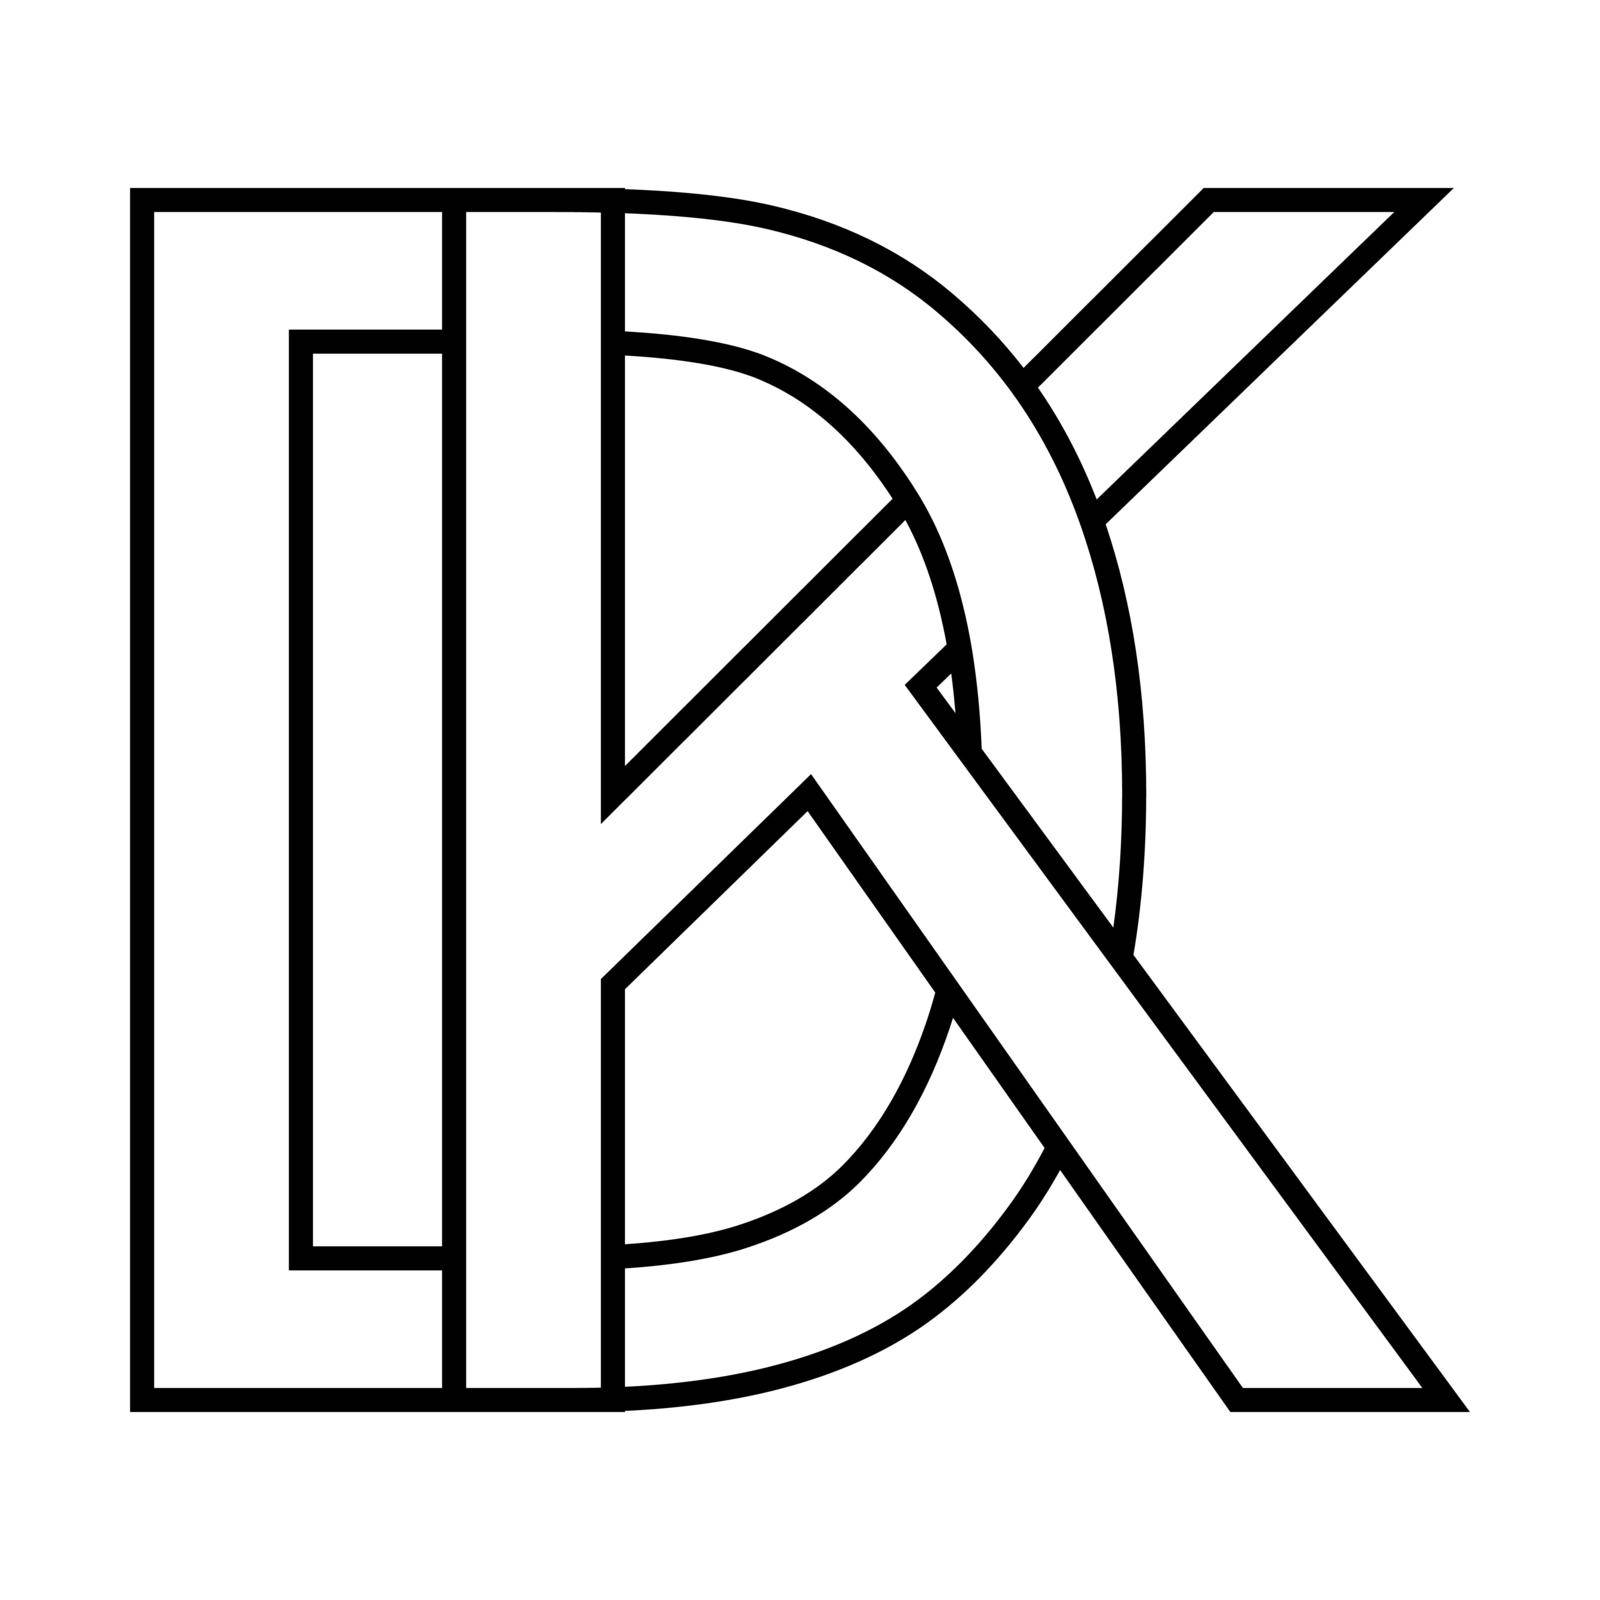 Logo sign dk kd icon sign, dk interlaced letters d k by koksikoks